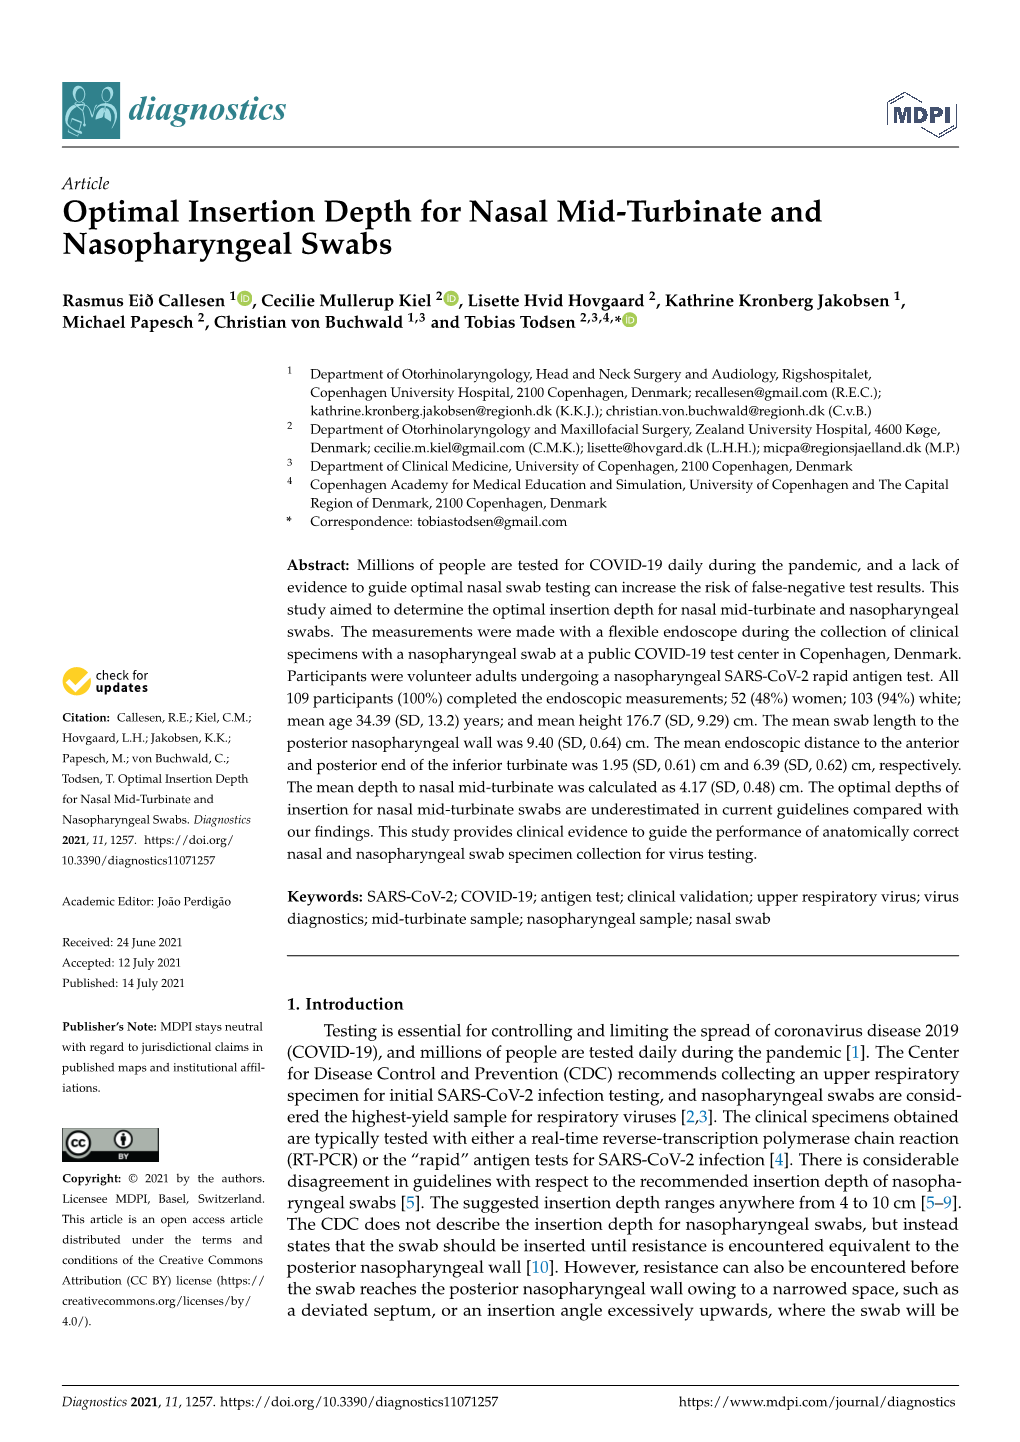 Optimal Insertion Depth for Nasal Mid-Turbinate and Nasopharyngeal Swabs